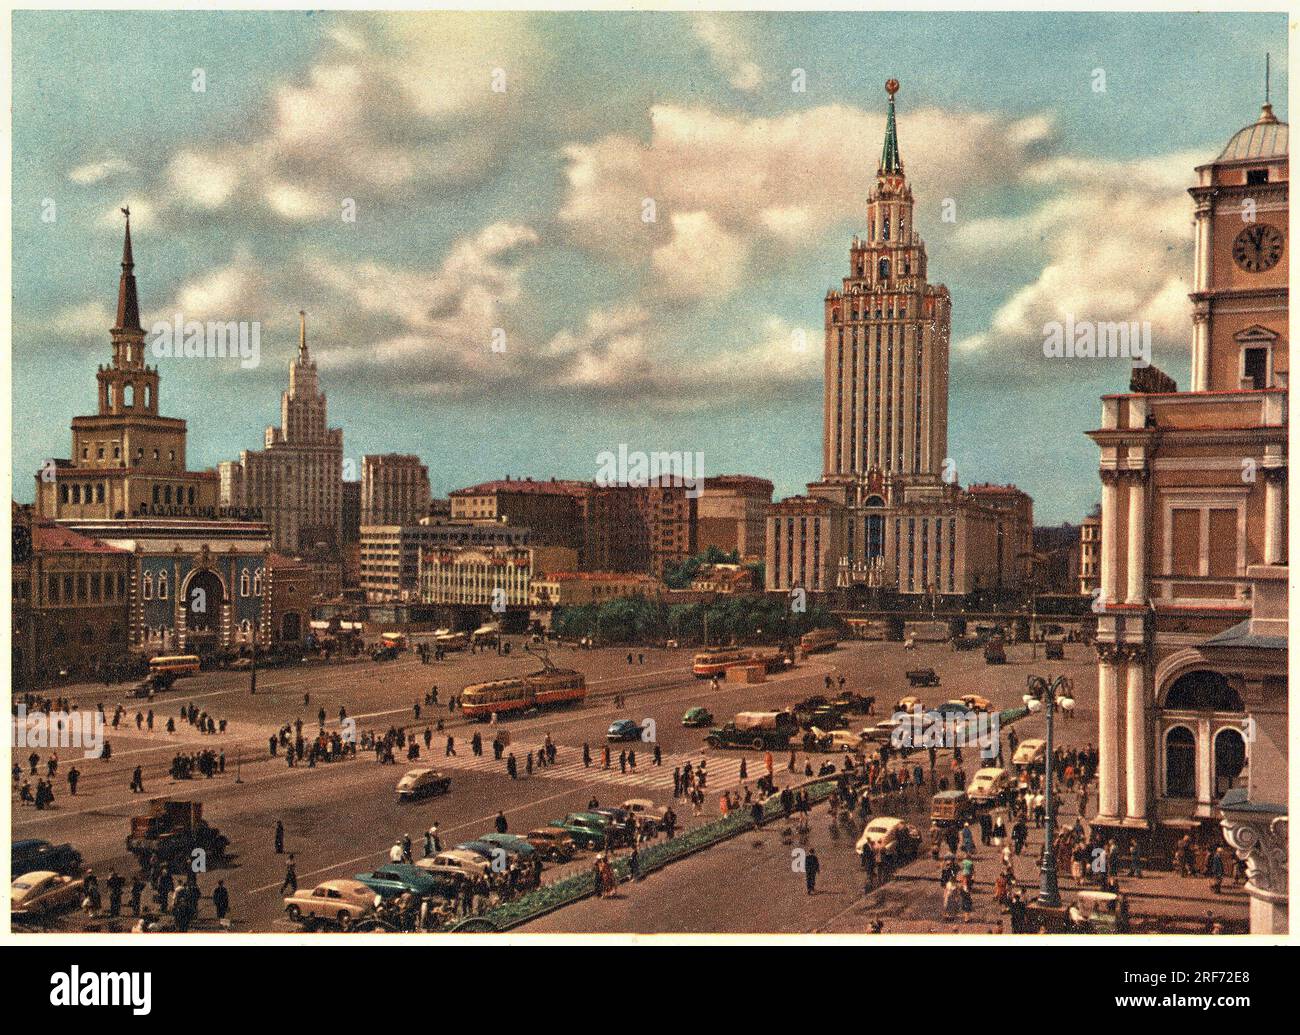 Architektur Stalinienne, Place Komsomolskaya a Moscou Construite en 1952. Fotografie, Moscou, 1955. Stockfoto